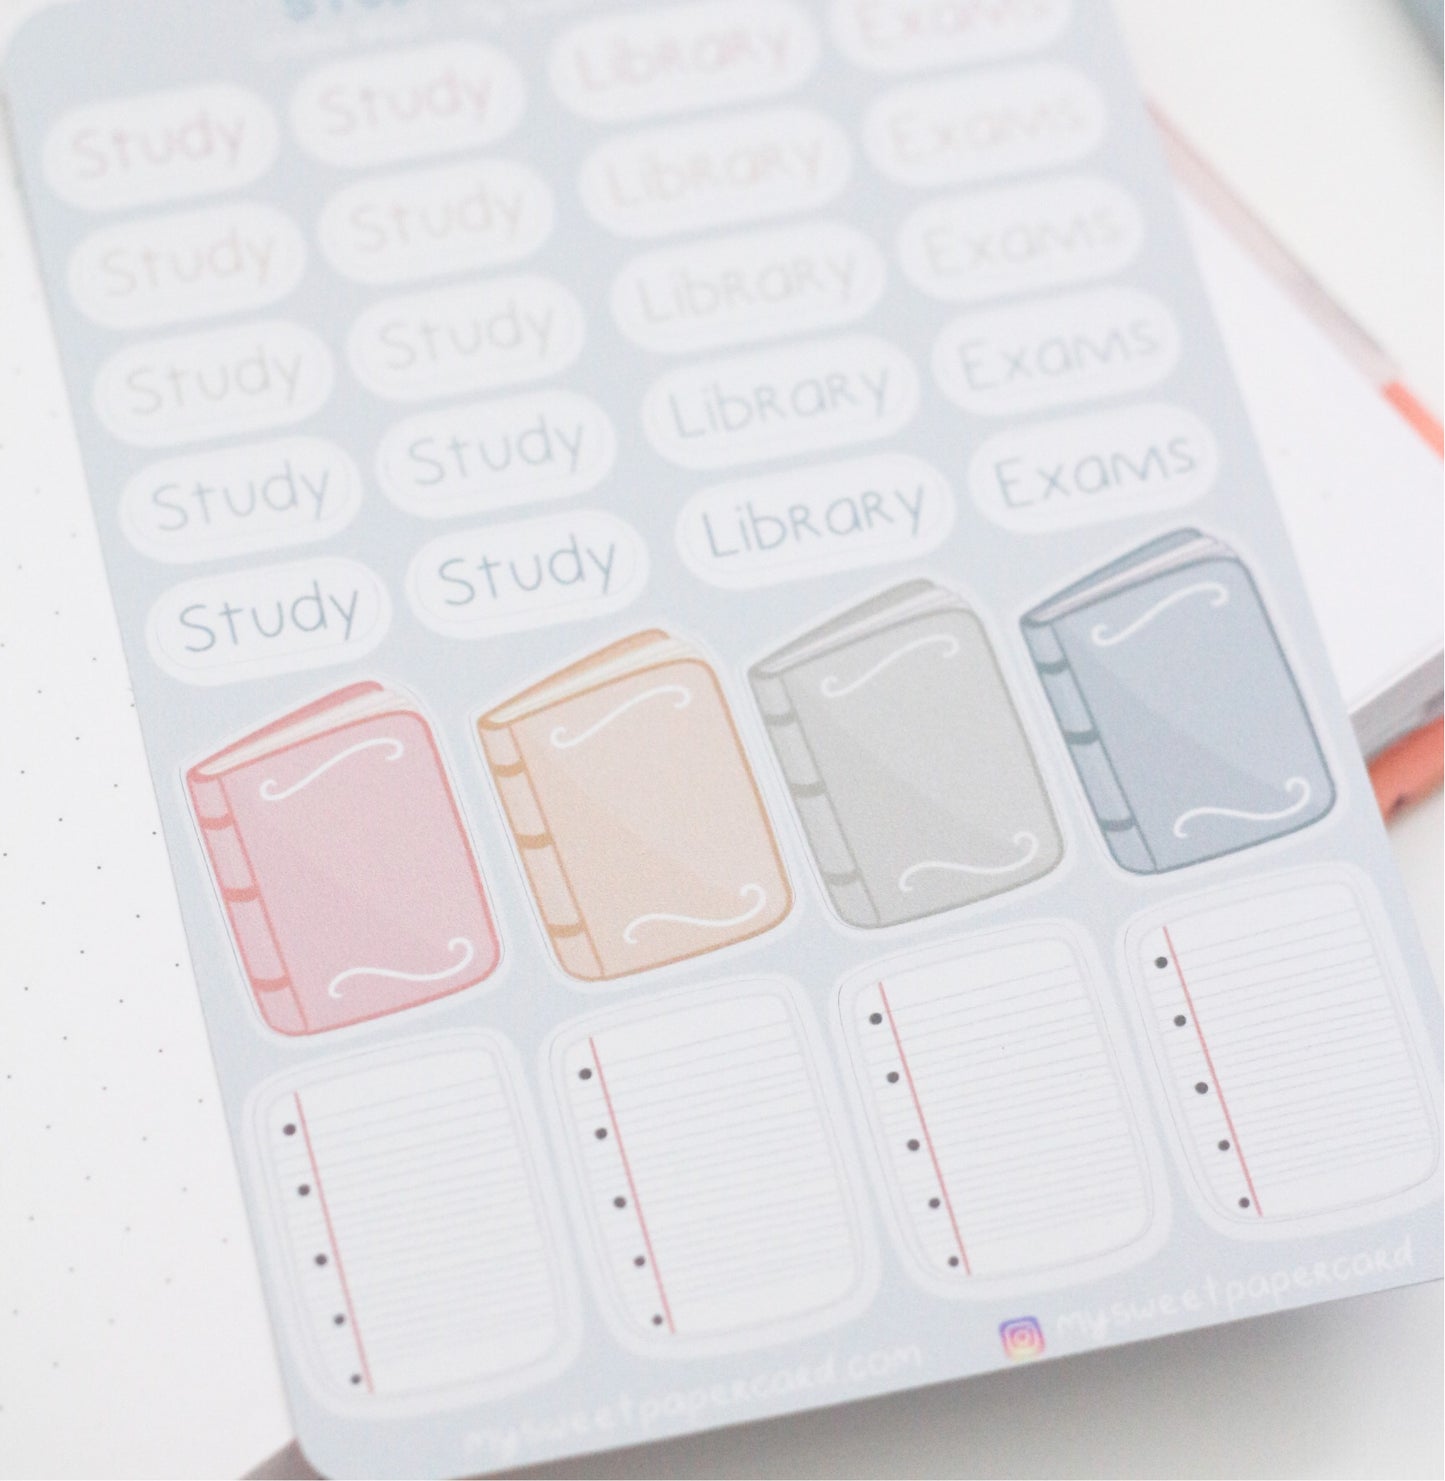 Pastel school stickers - Exam planner stickers - Back to school stickers